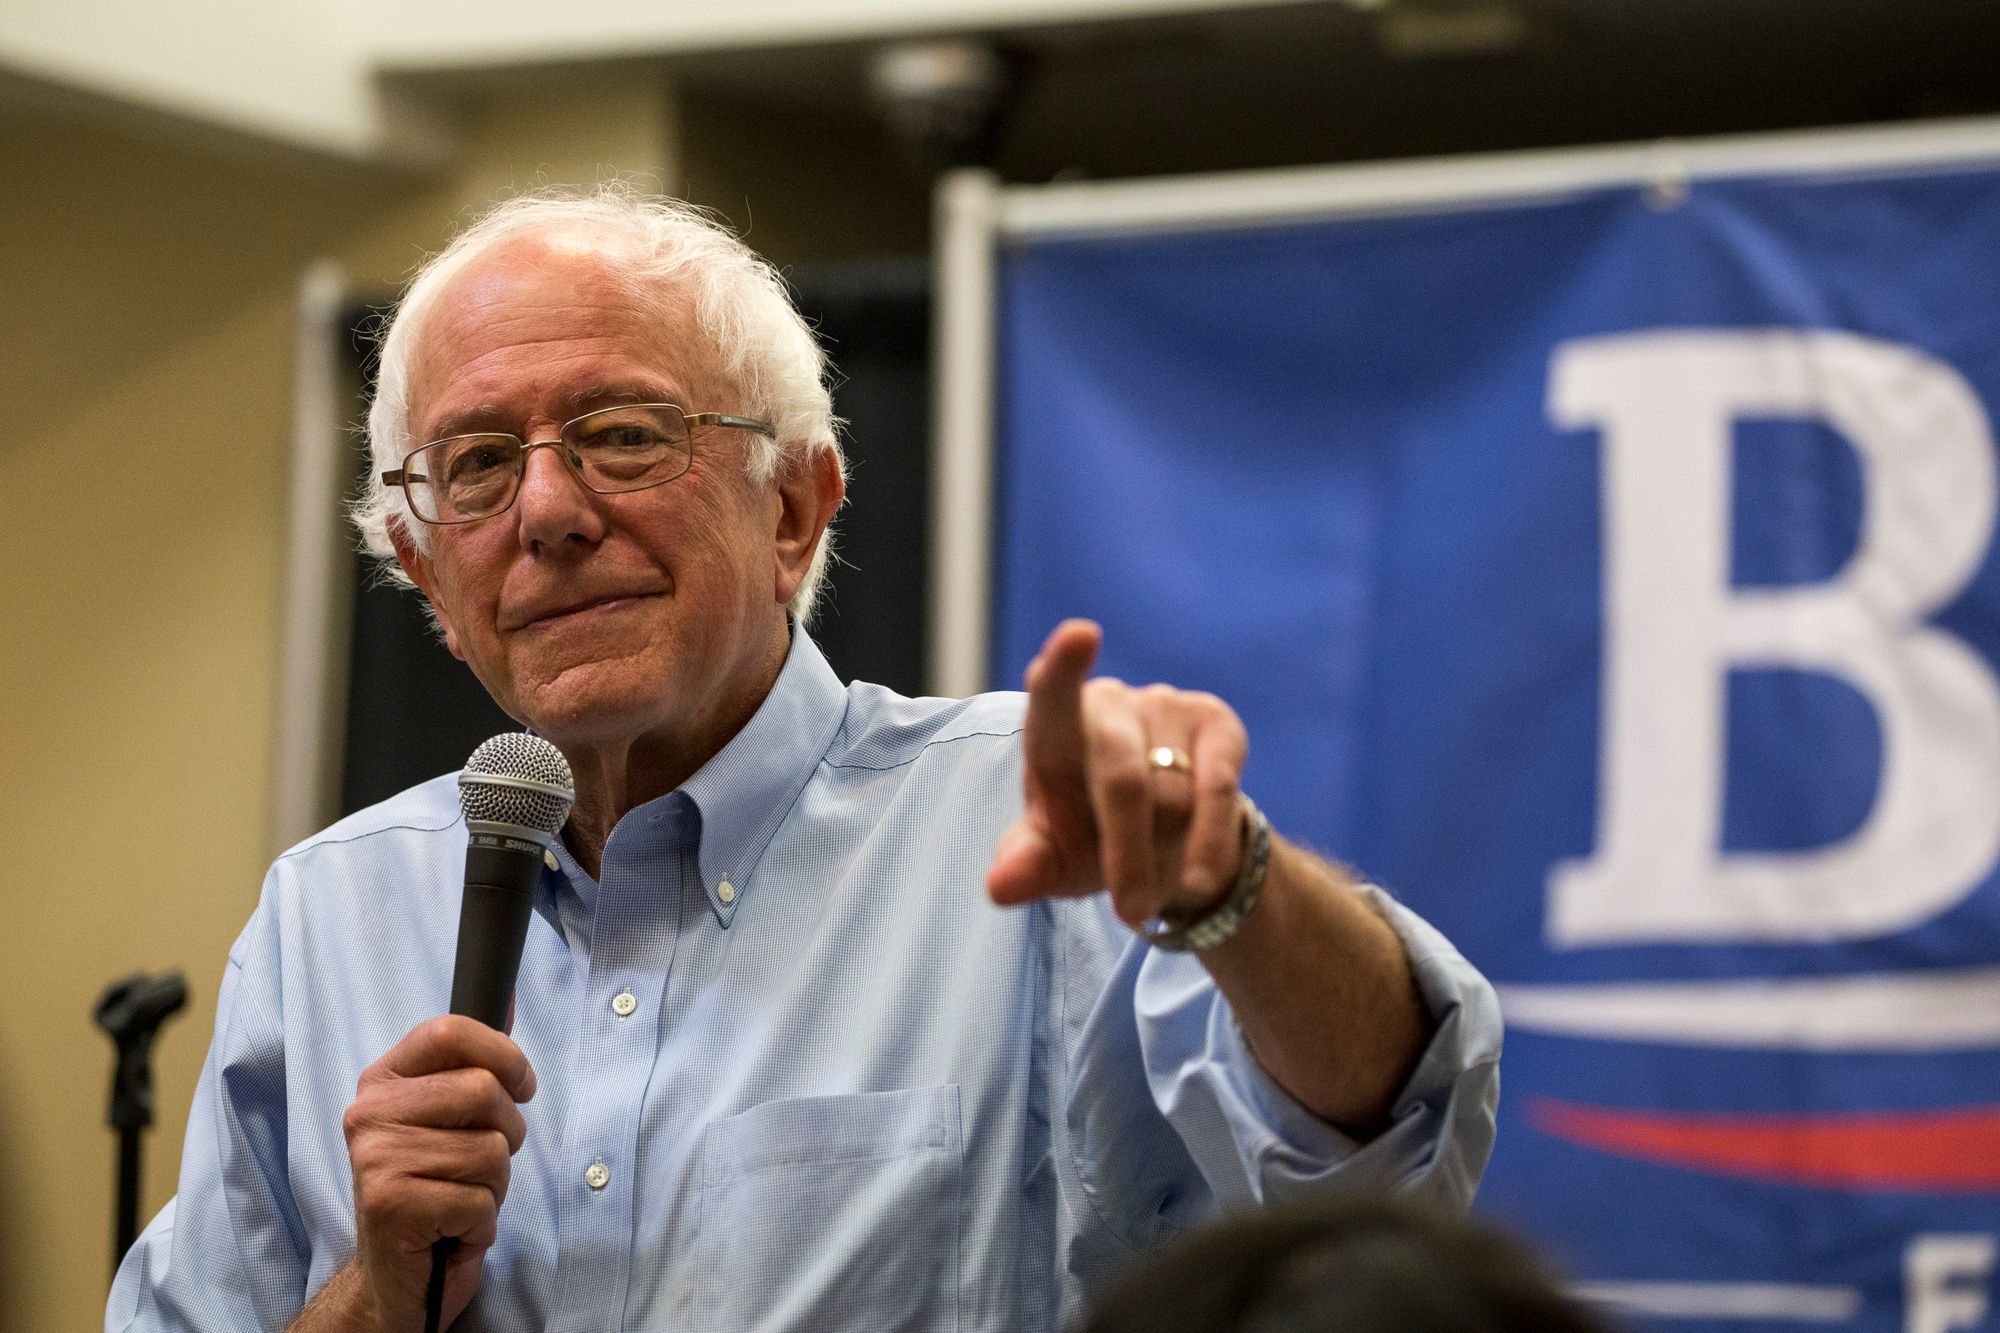 Bernie Sanders Announces 2020 Run For President: "We're gonna win" 🔥